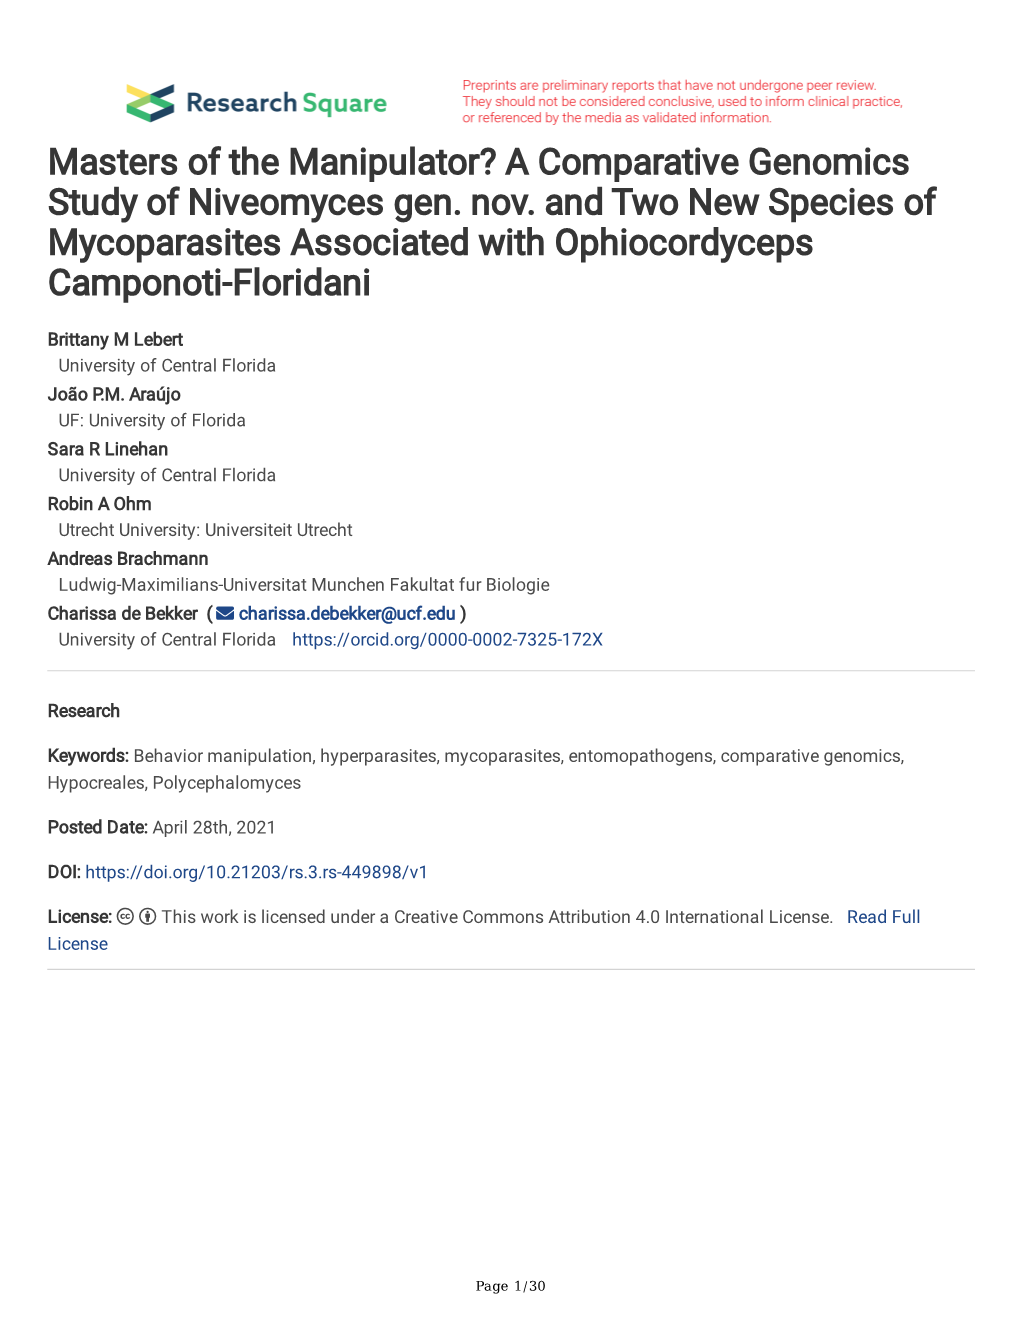 A Comparative Genomics Study of Niveomyces Gen